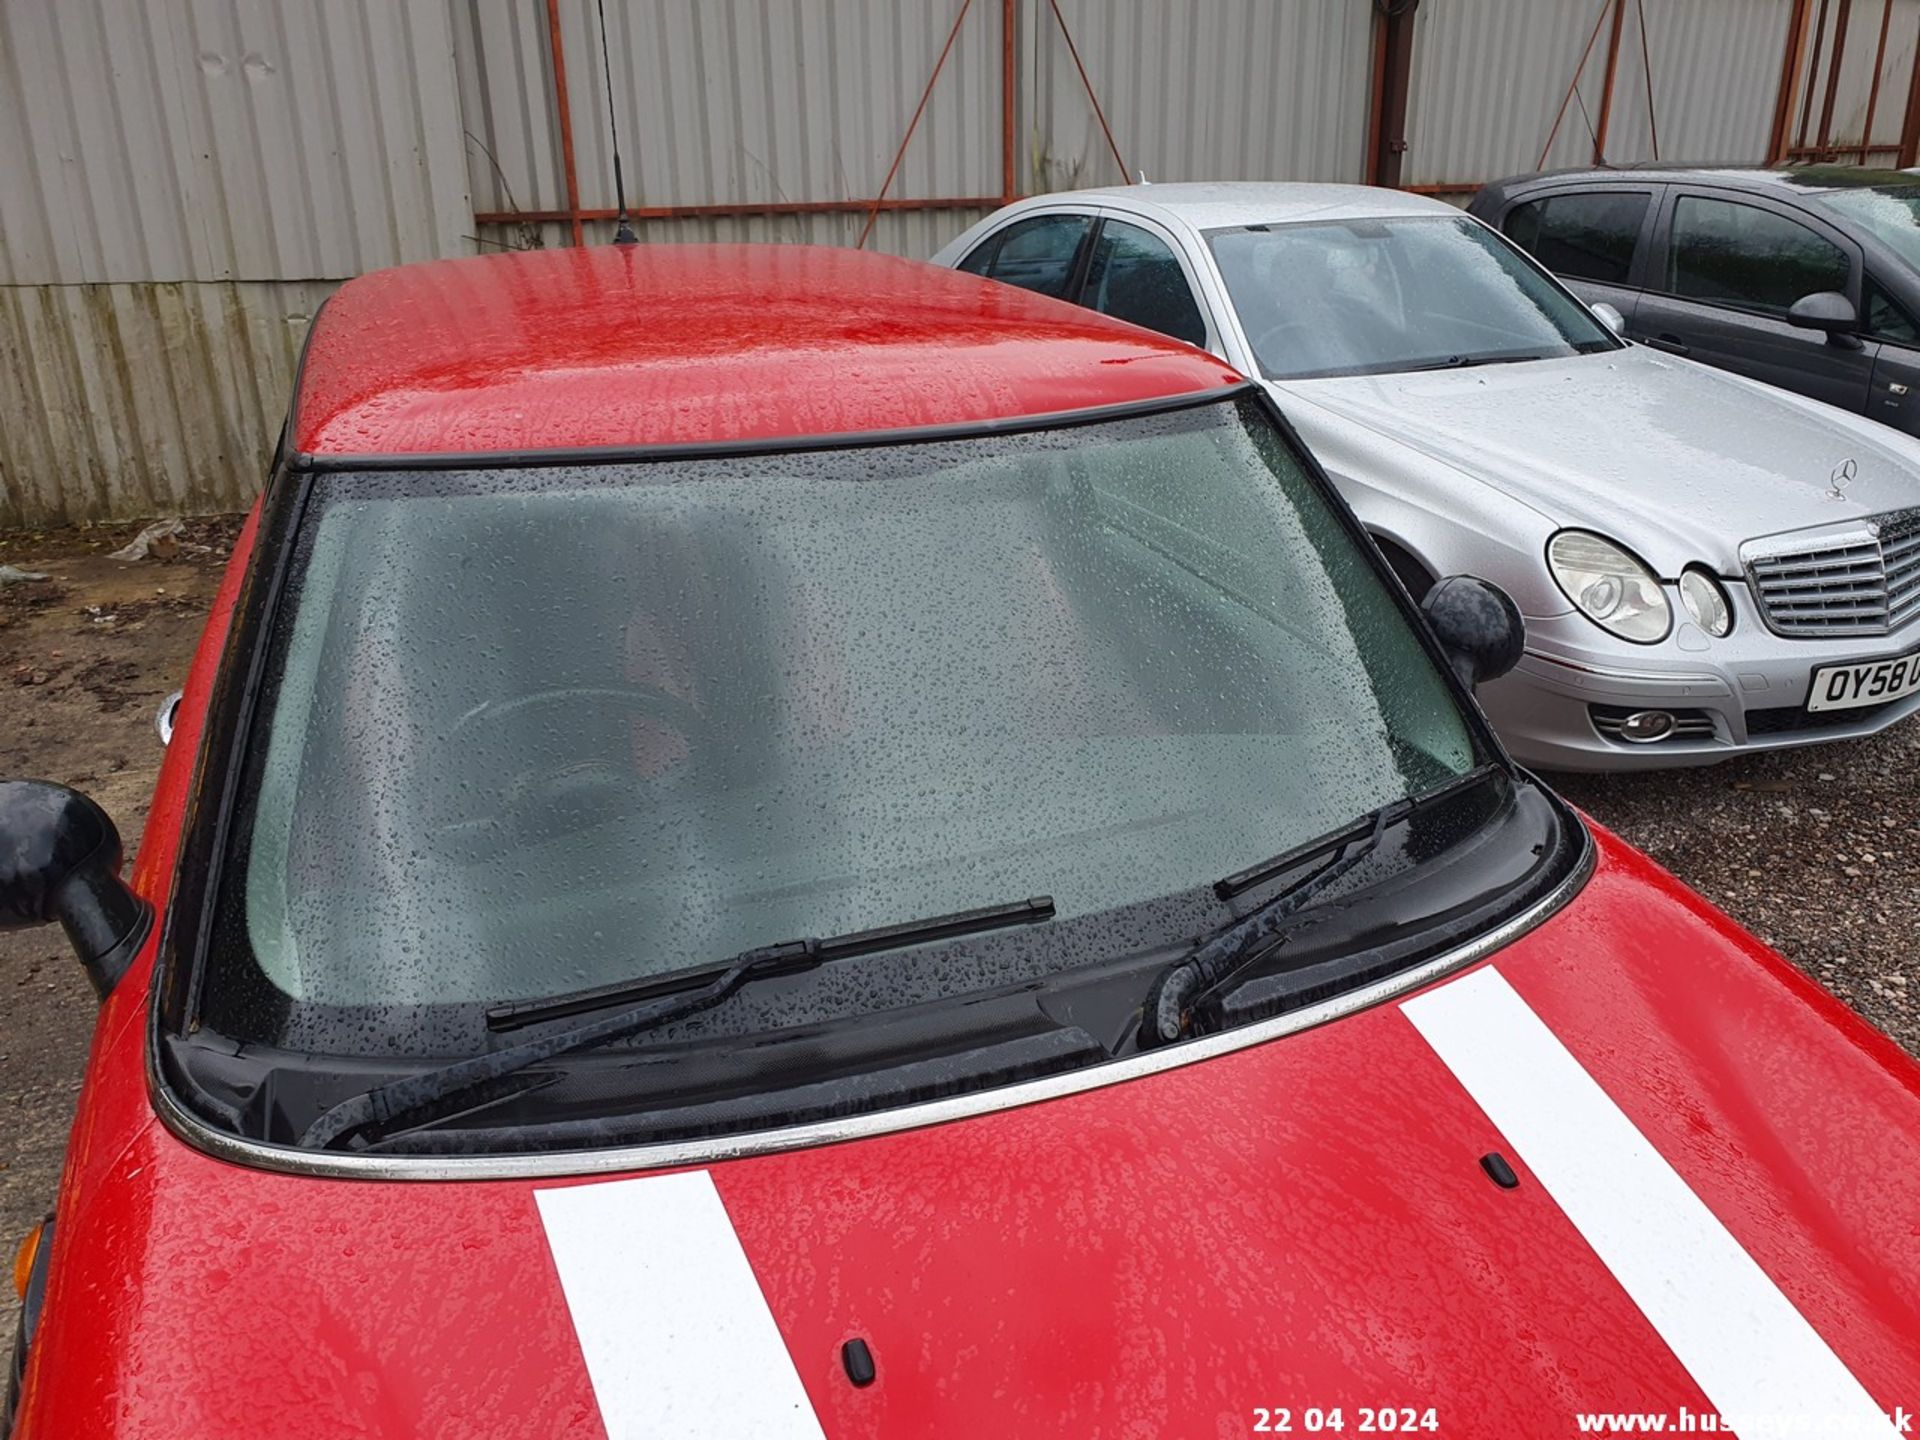 07/07 MINI ONE - 1397cc 3dr Hatchback (Red, 86k) - Image 26 of 46